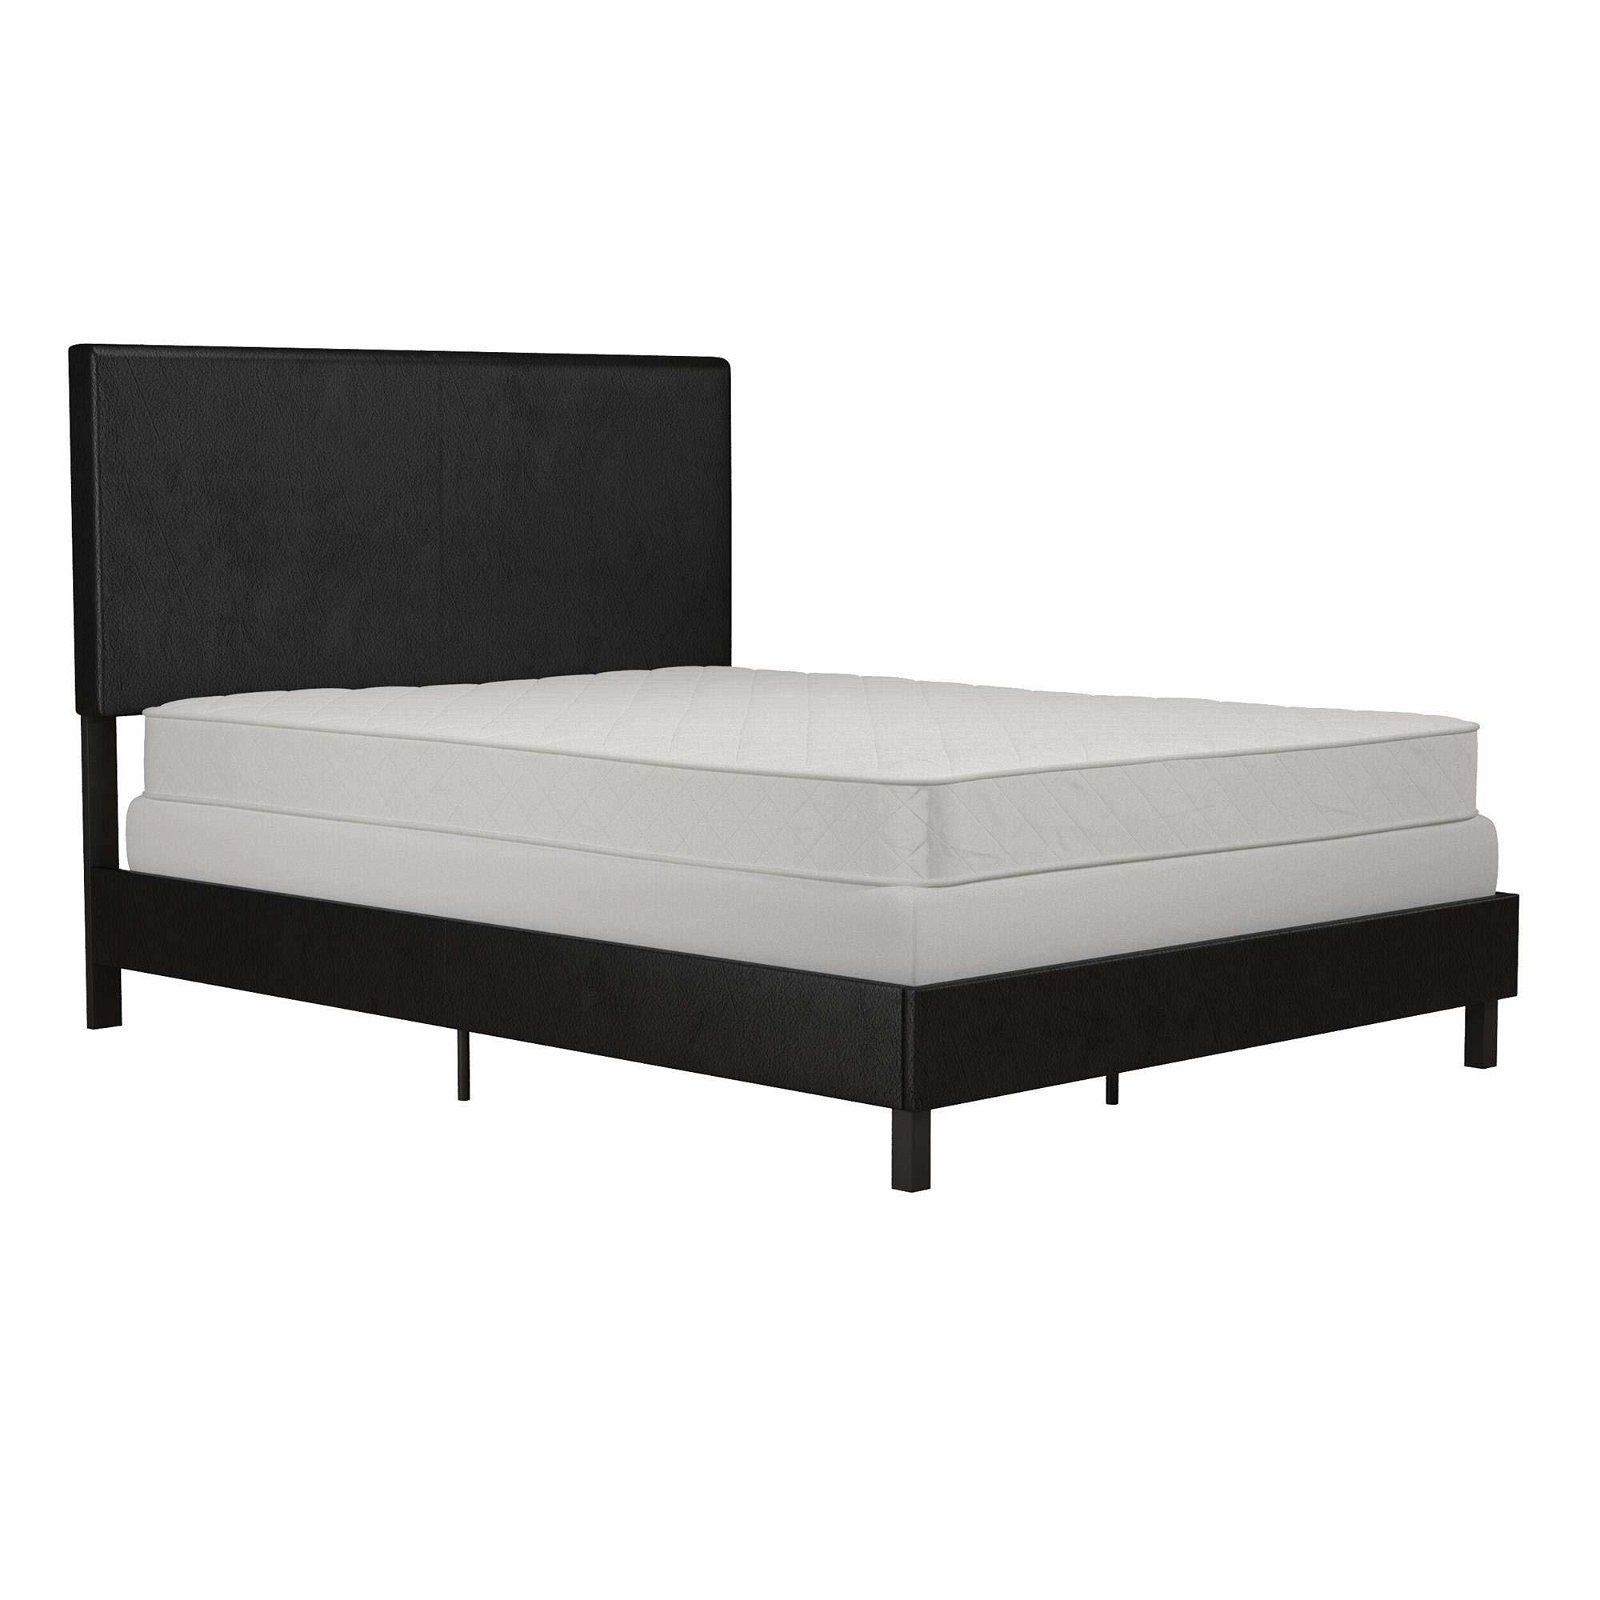 King Size Black Simplicity Upholstered Bed 3